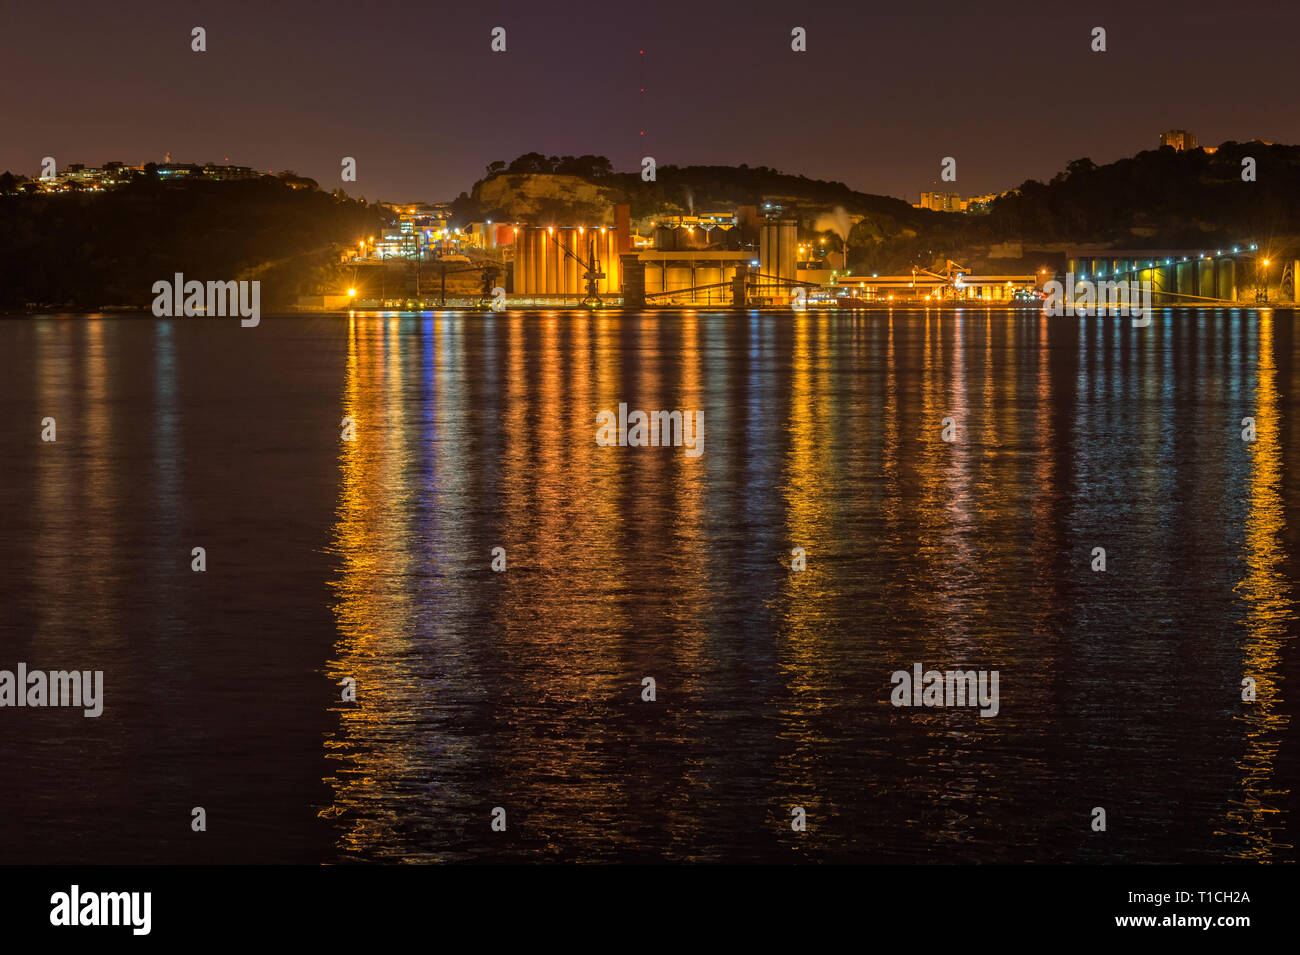 Porto brandao hi-res stock photography and images - Alamy